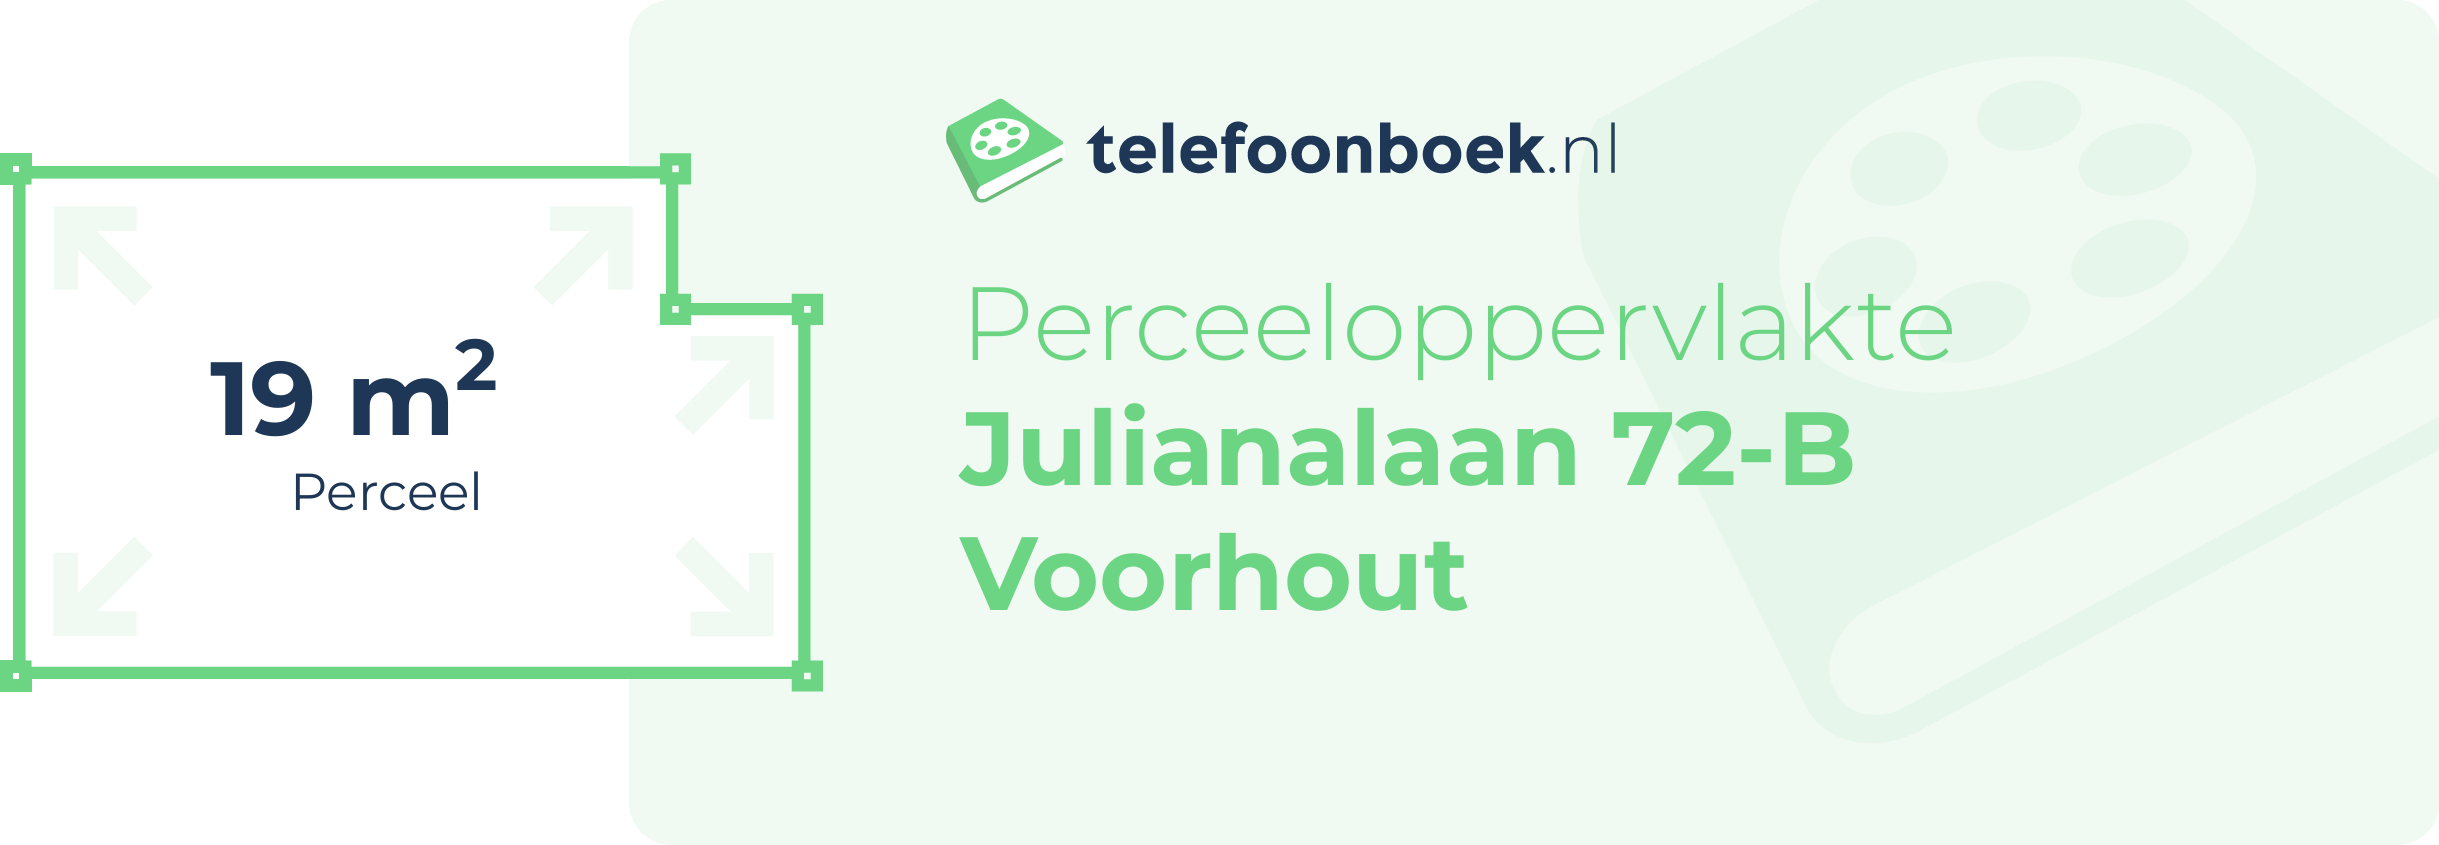 Perceeloppervlakte Julianalaan 72-B Voorhout